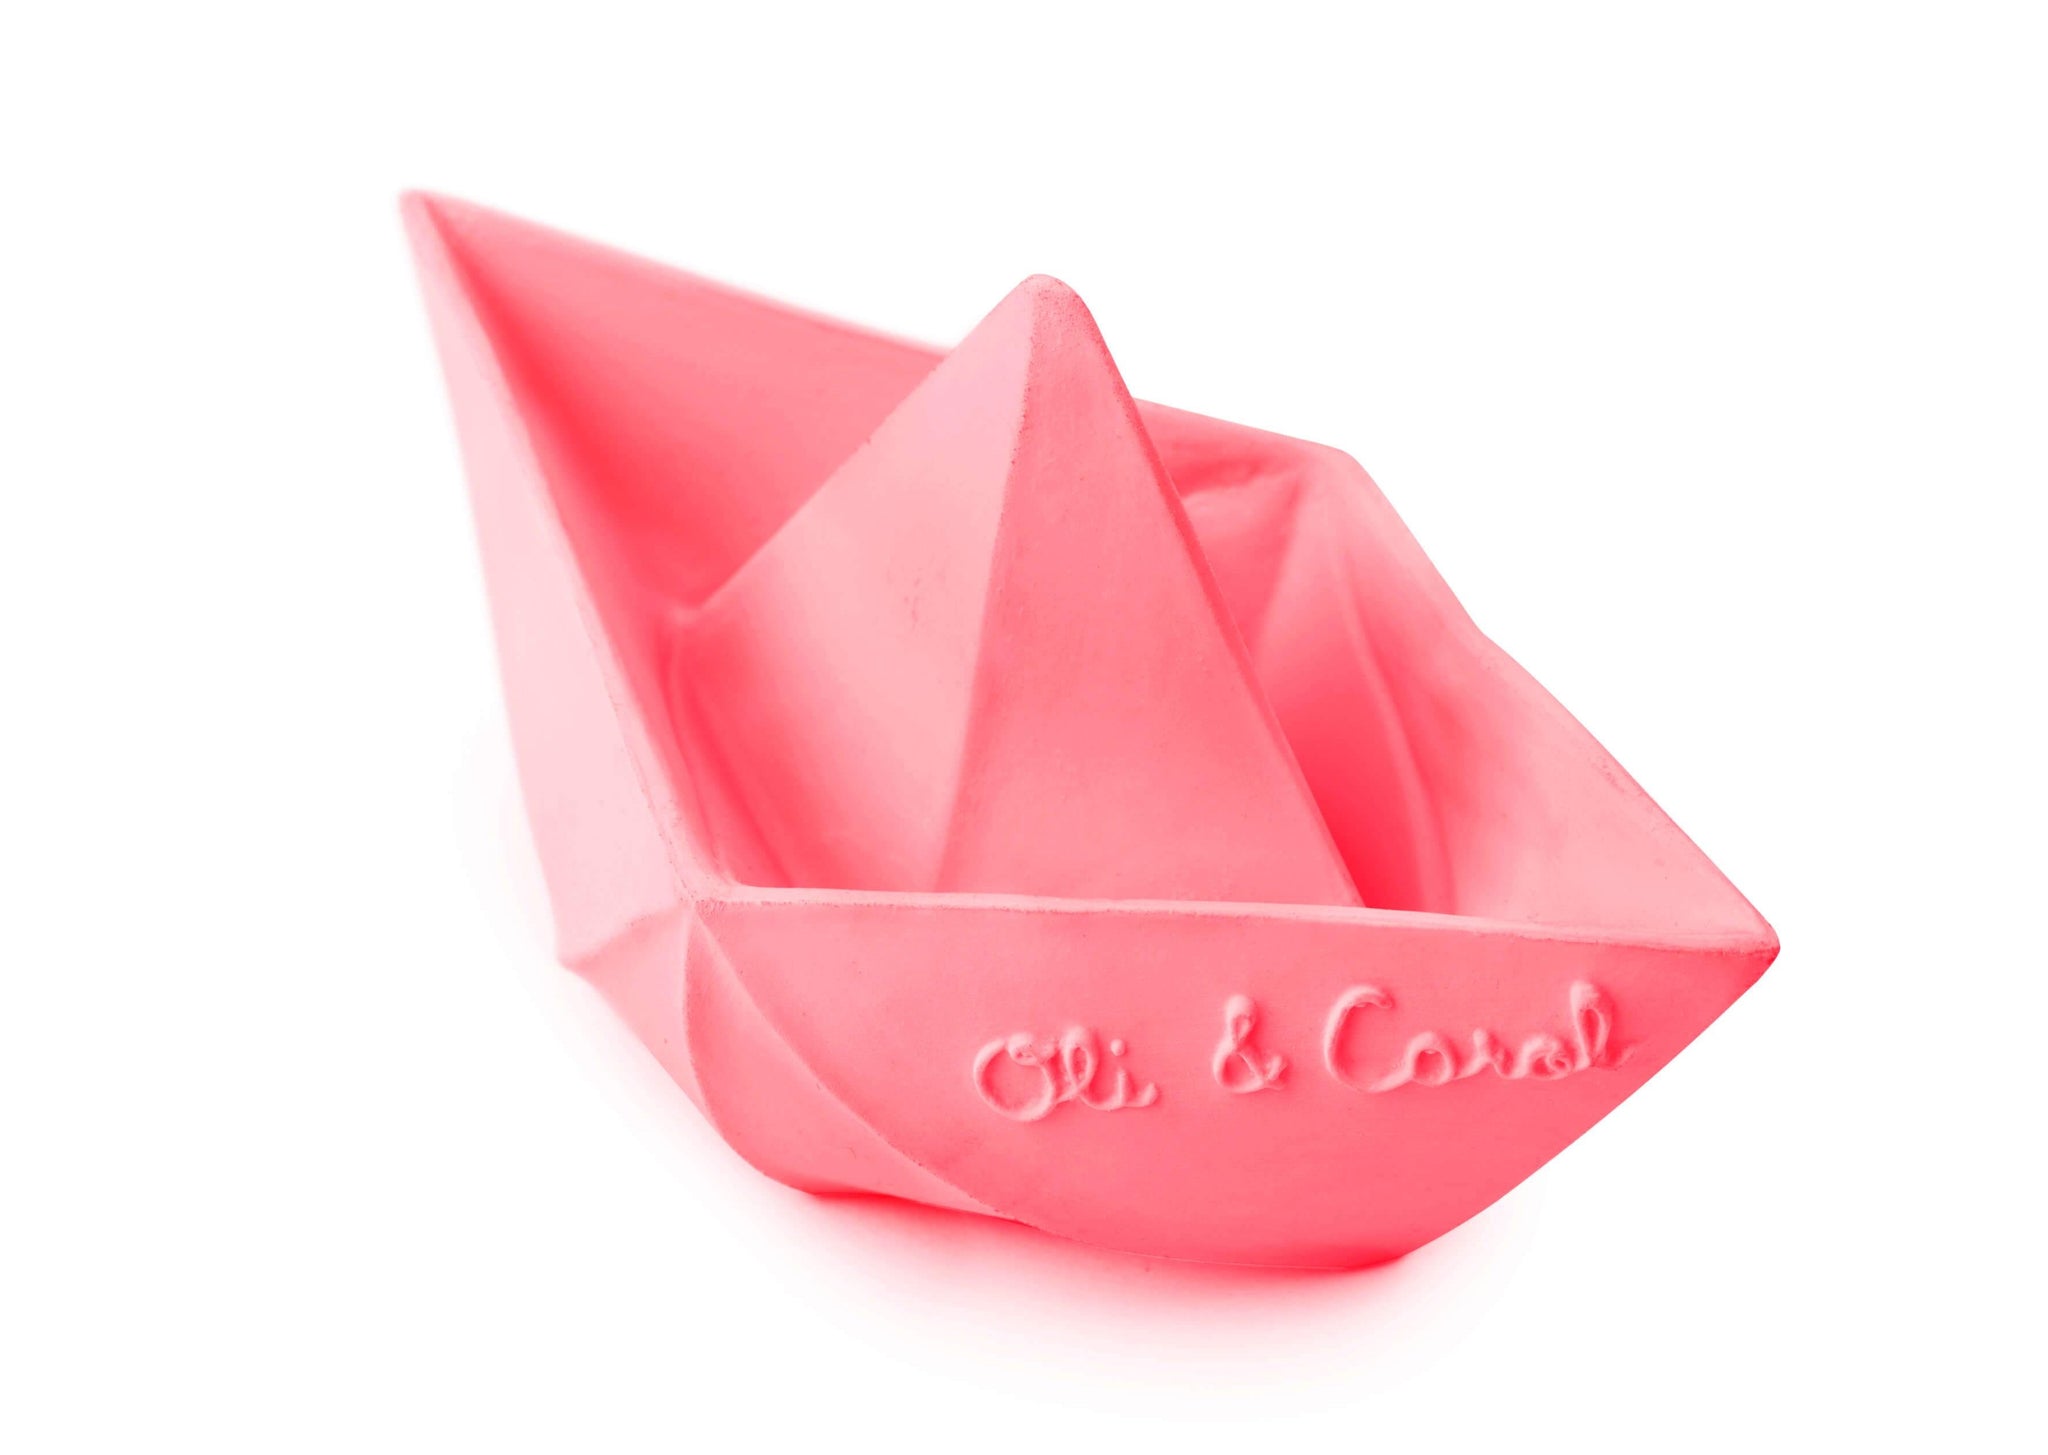 Barco Origami Rosa